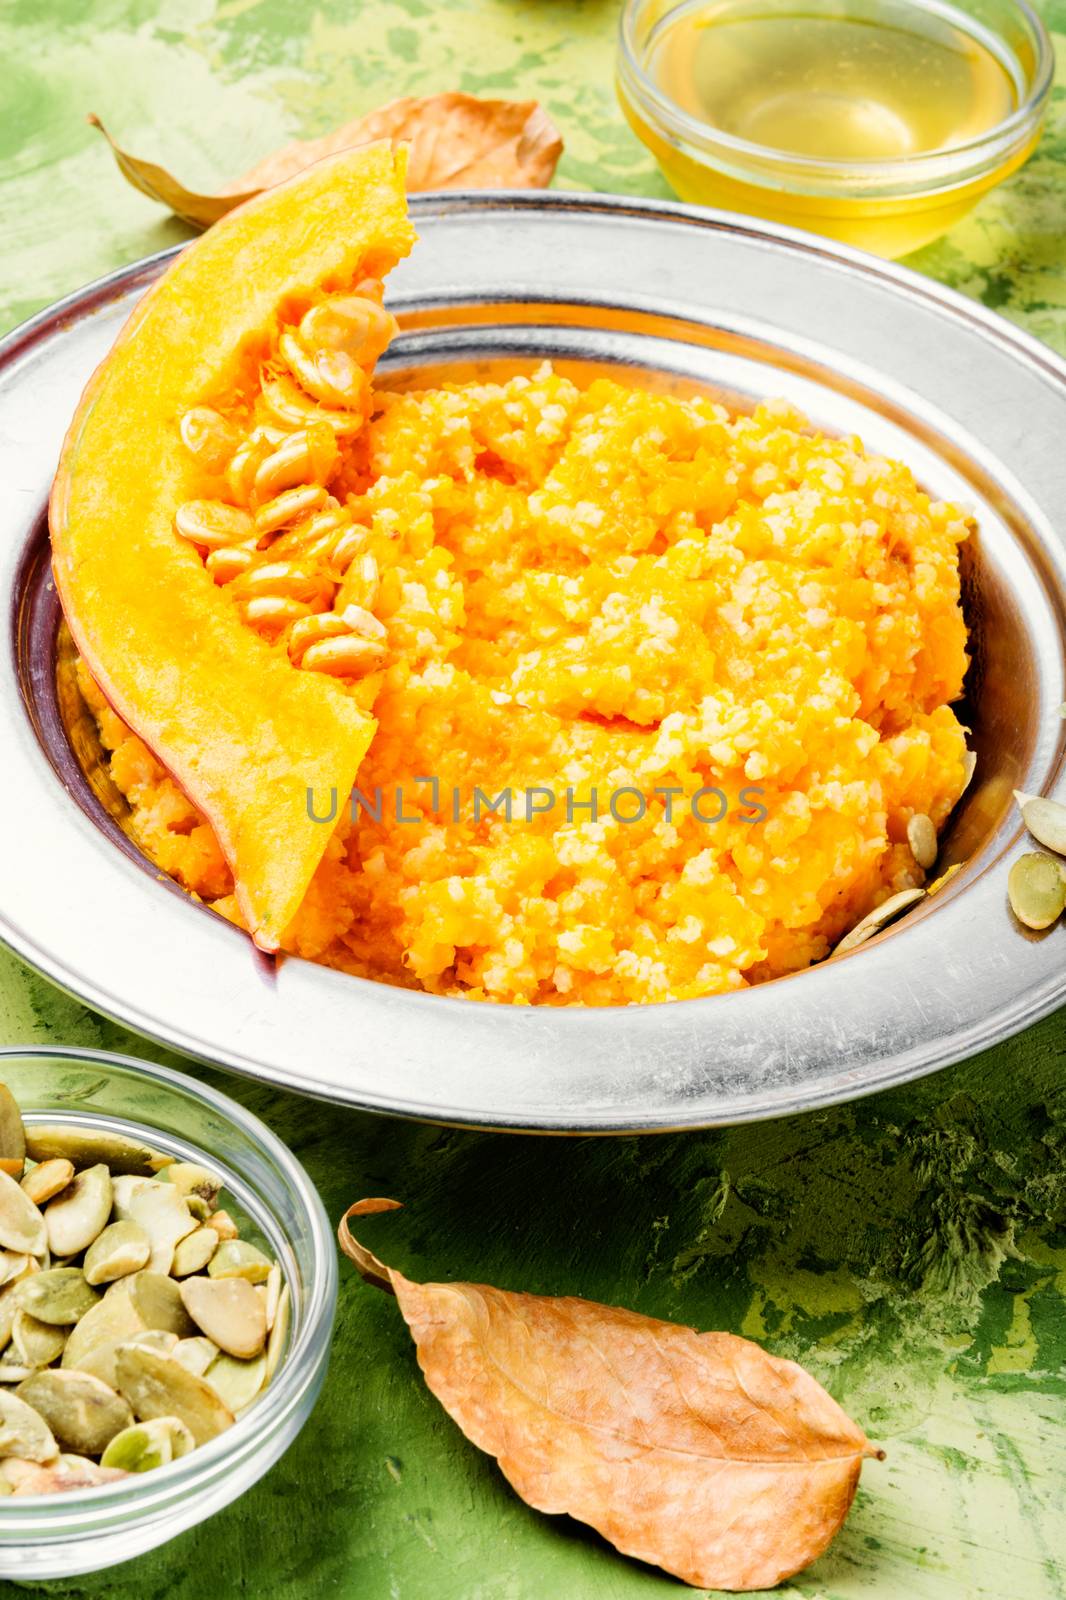 Homemade tasty porridge with orange pumpkin on green background